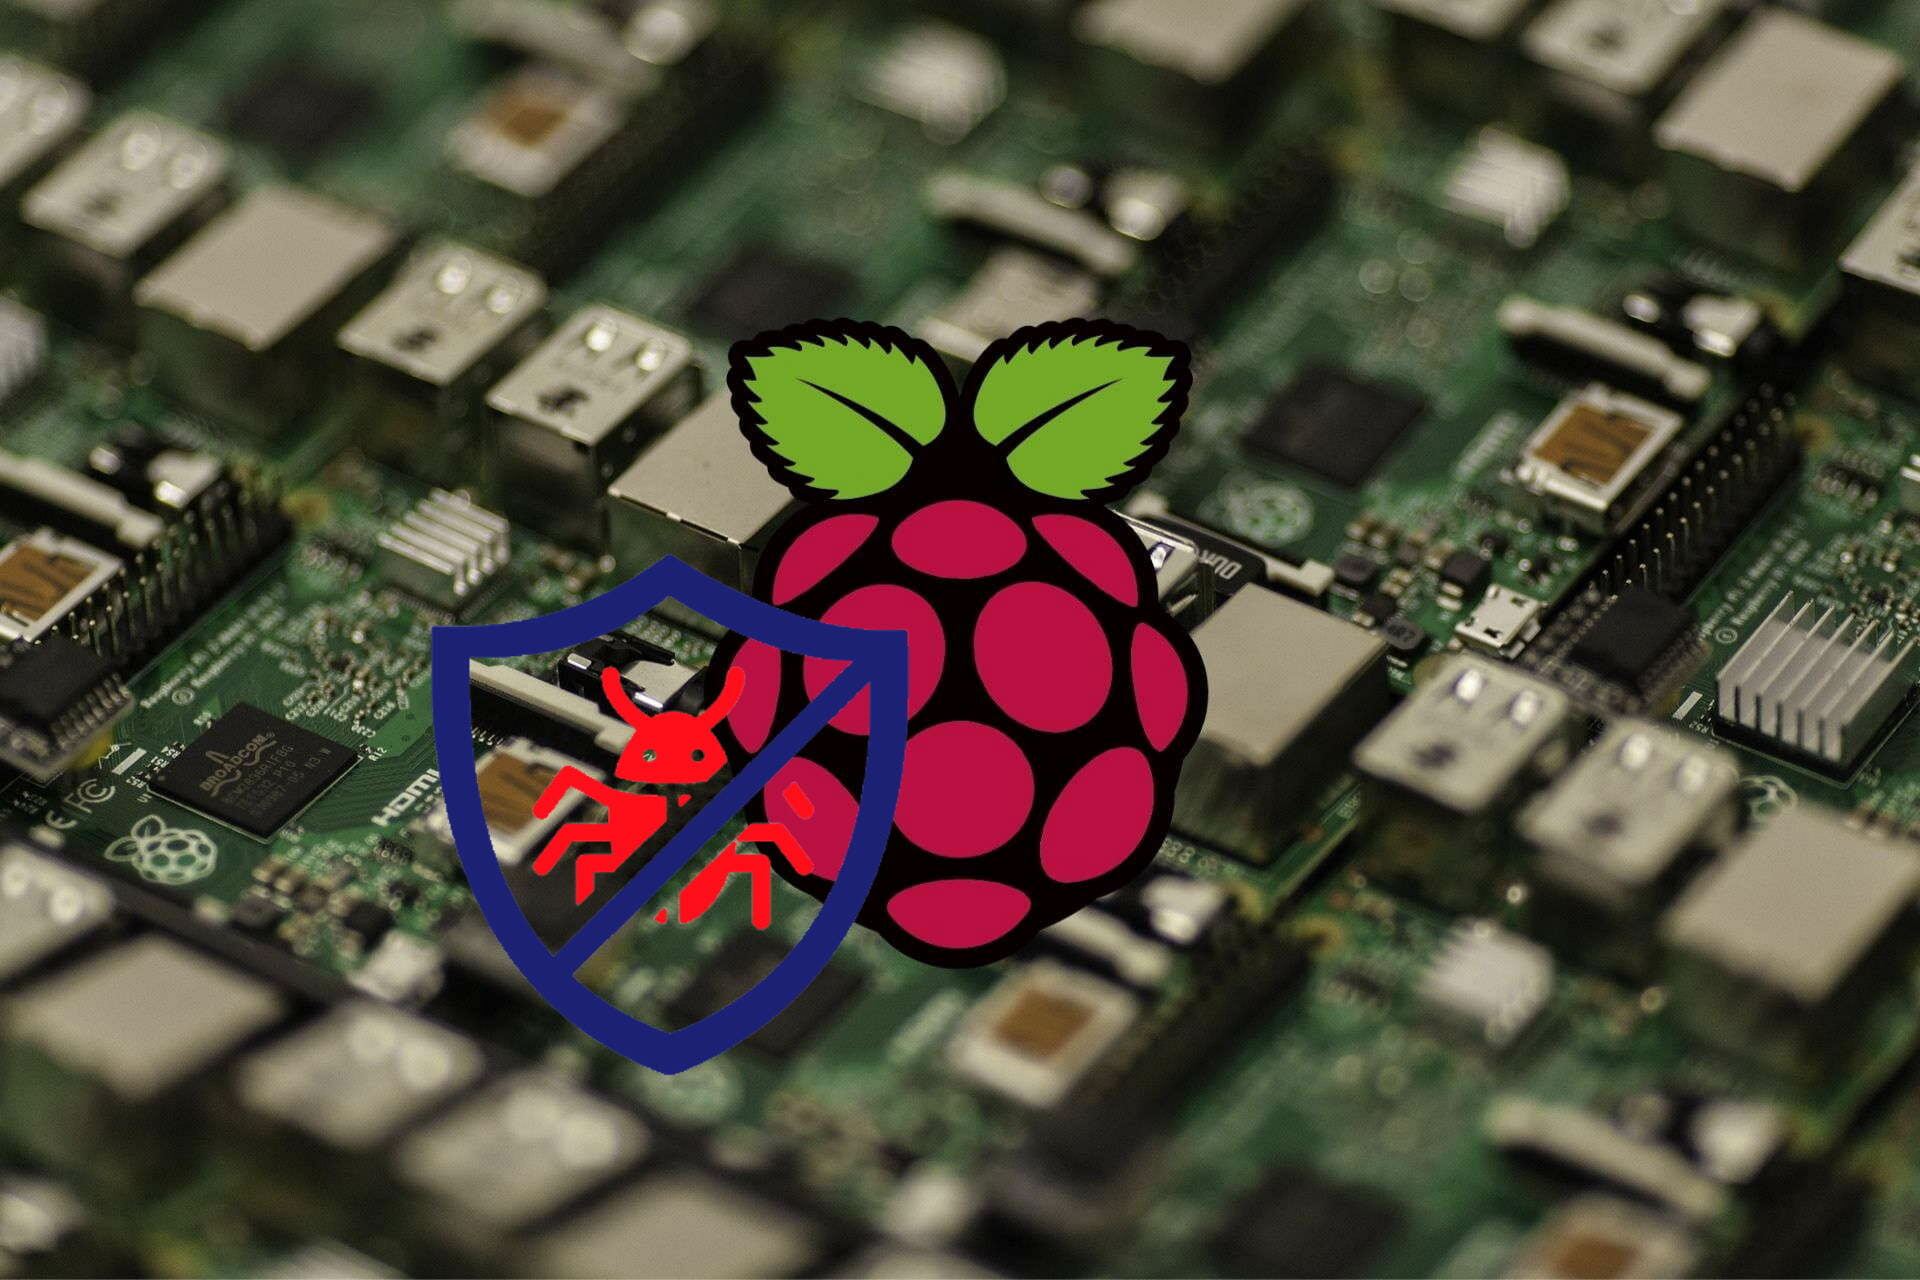 Does Raspberry need antivirus?